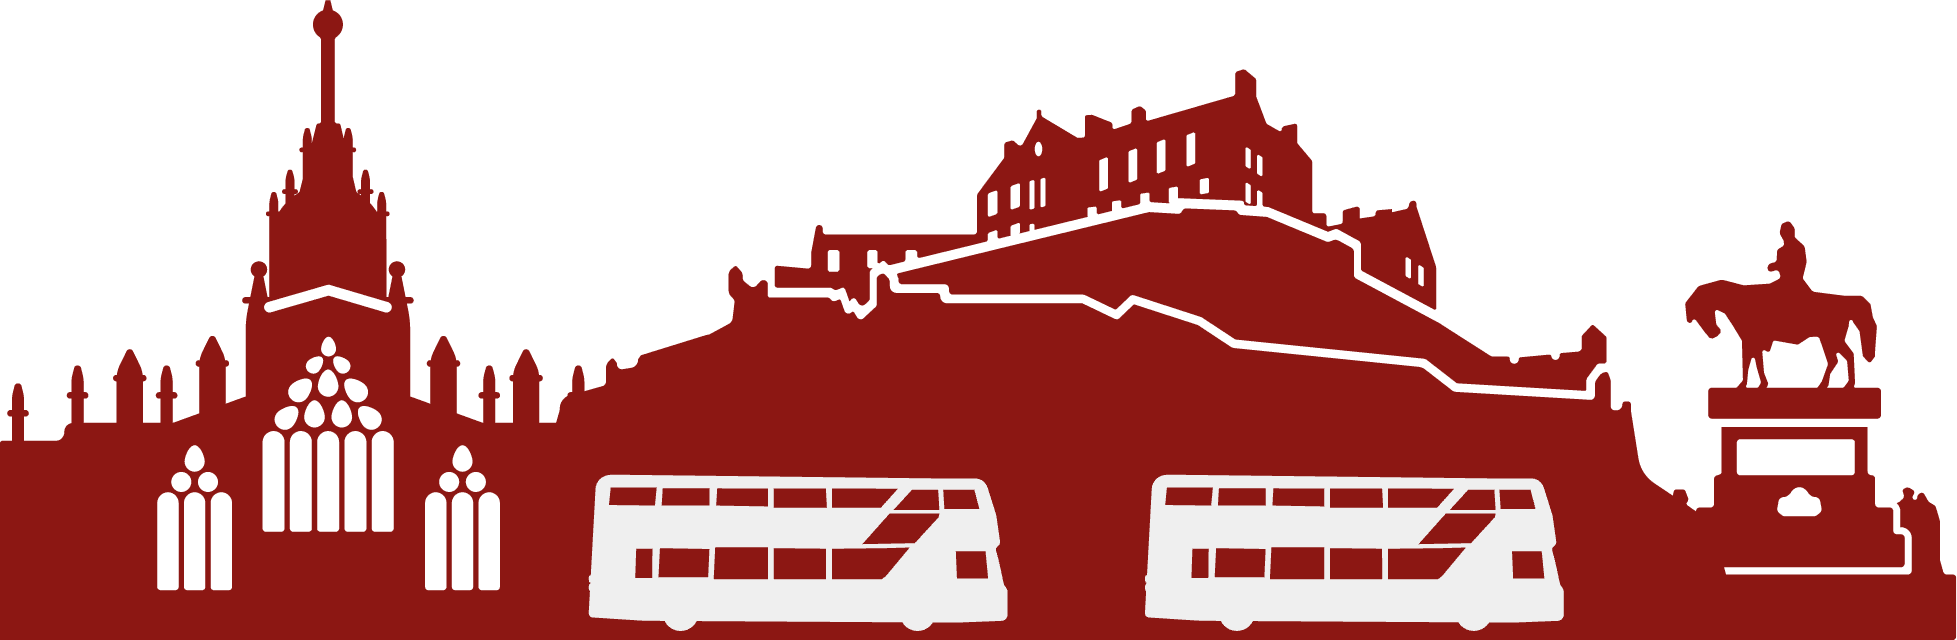 illustration of edinburgh skyline with lothian buses silhouetted underneath